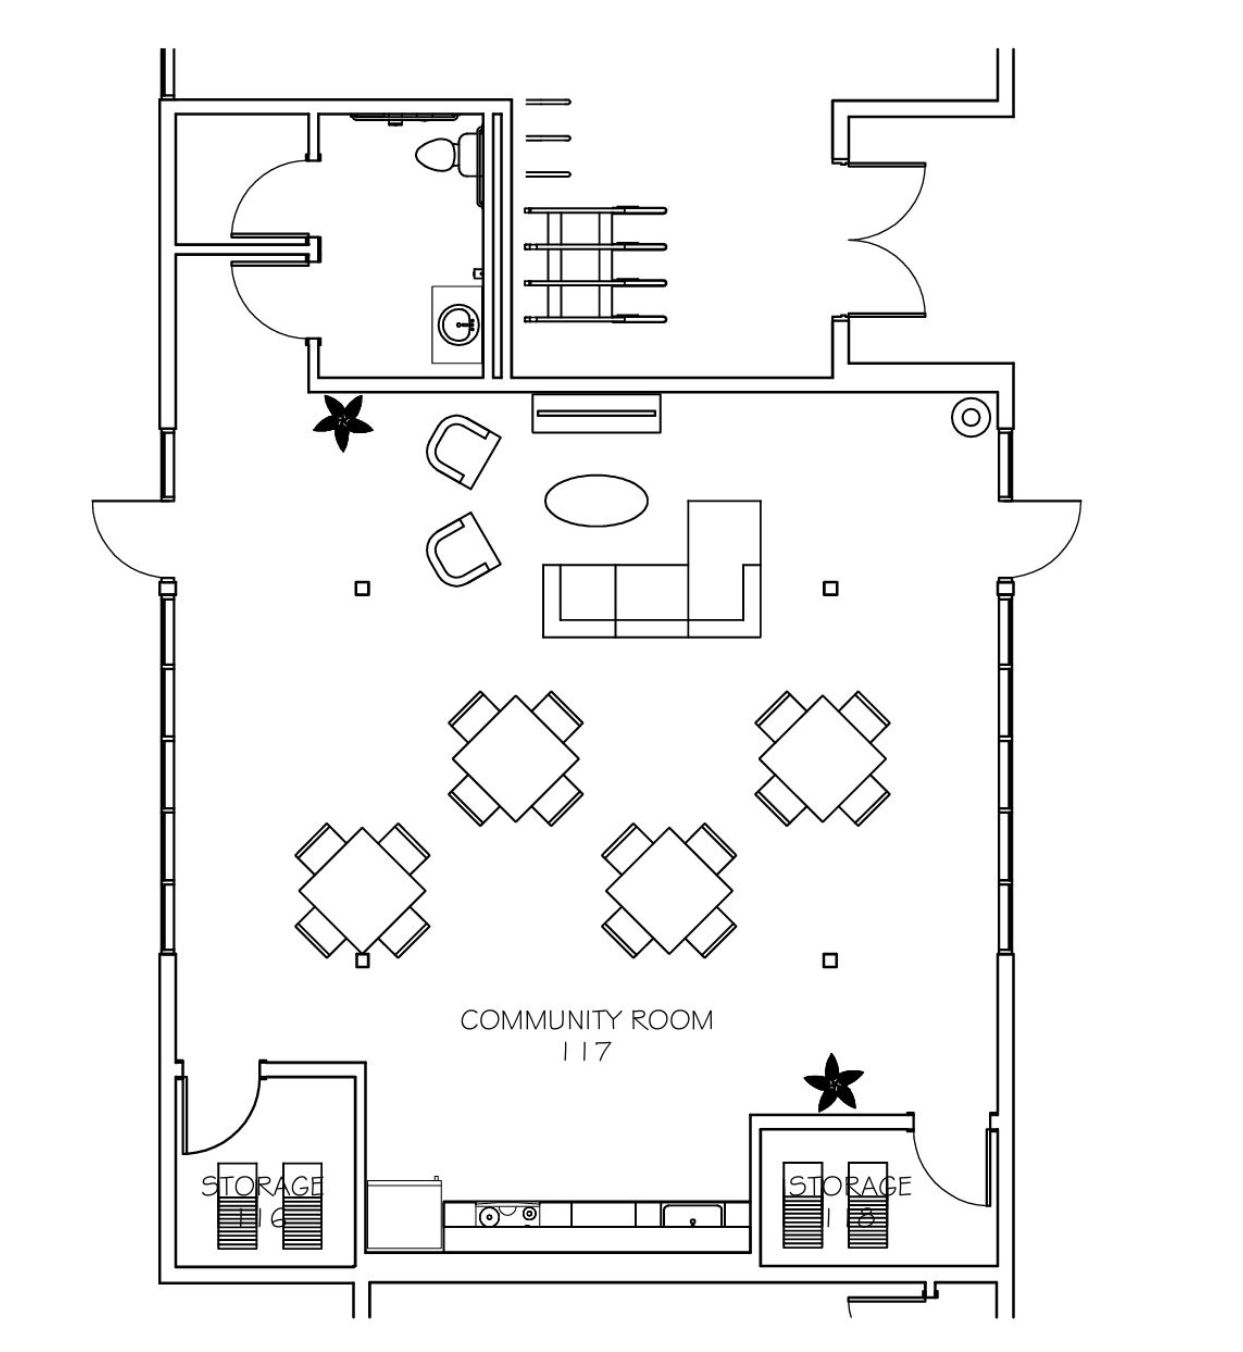 Floor Plan of the Community Room